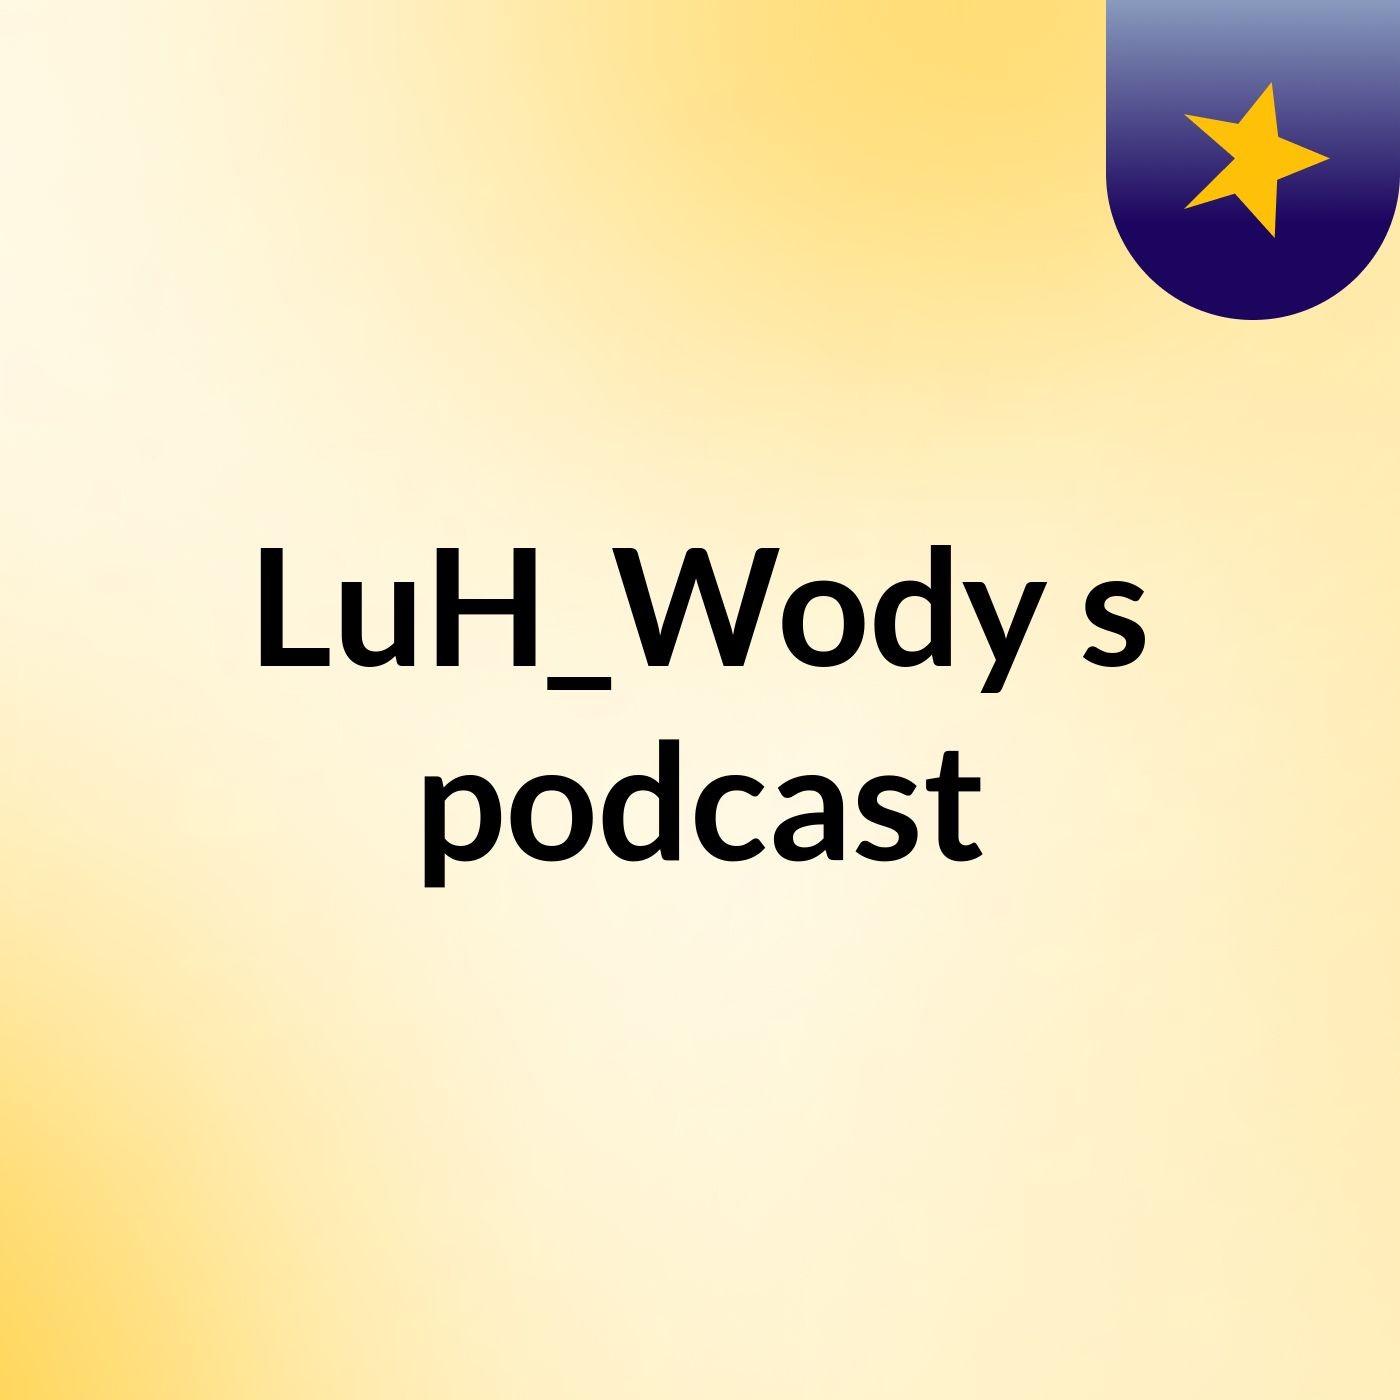 LuH_Wody's podcast